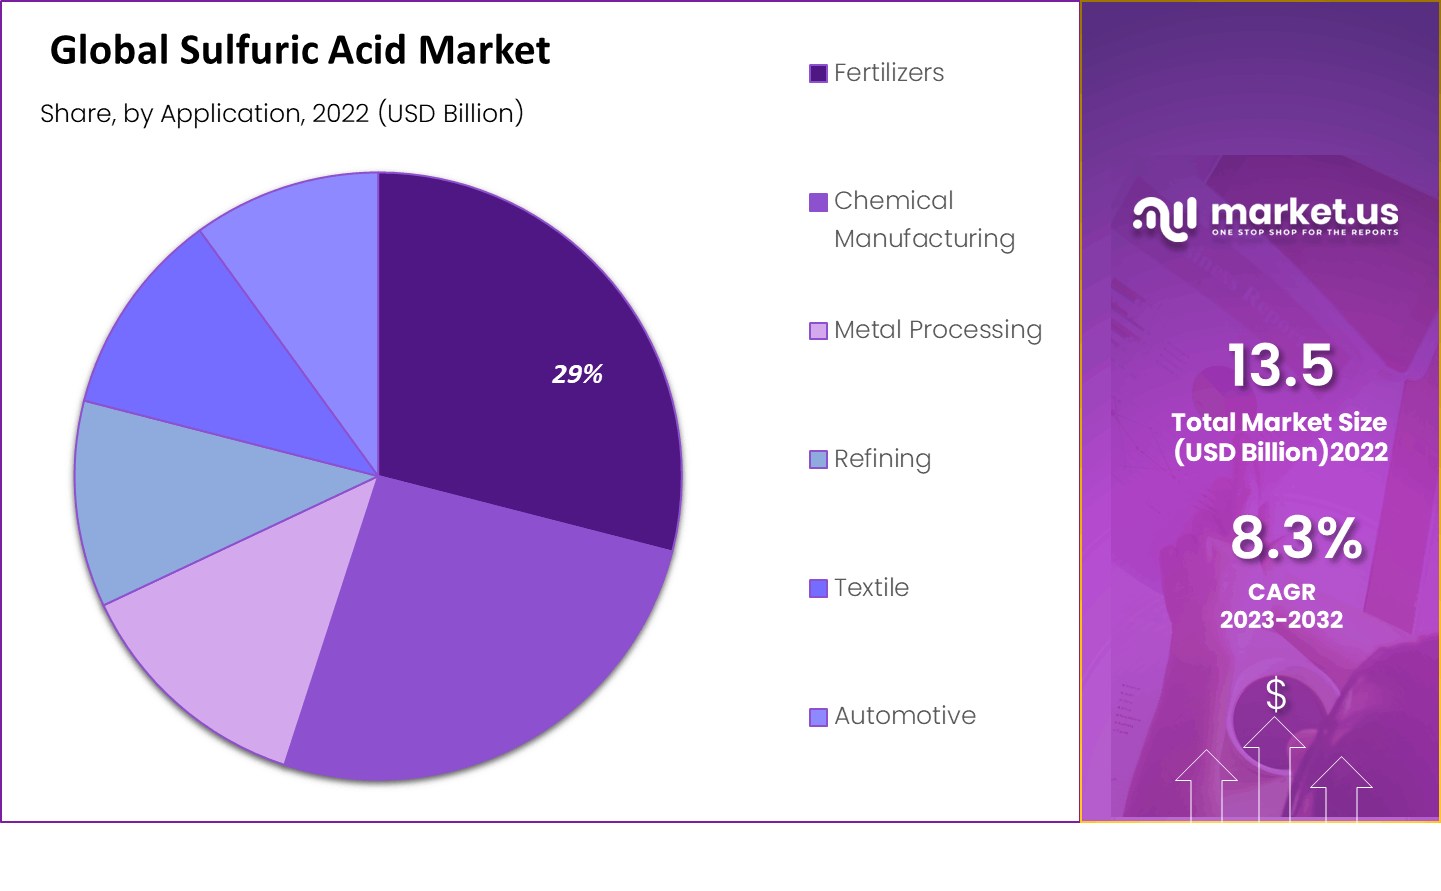 Global Sulfuric Acid Market by Application